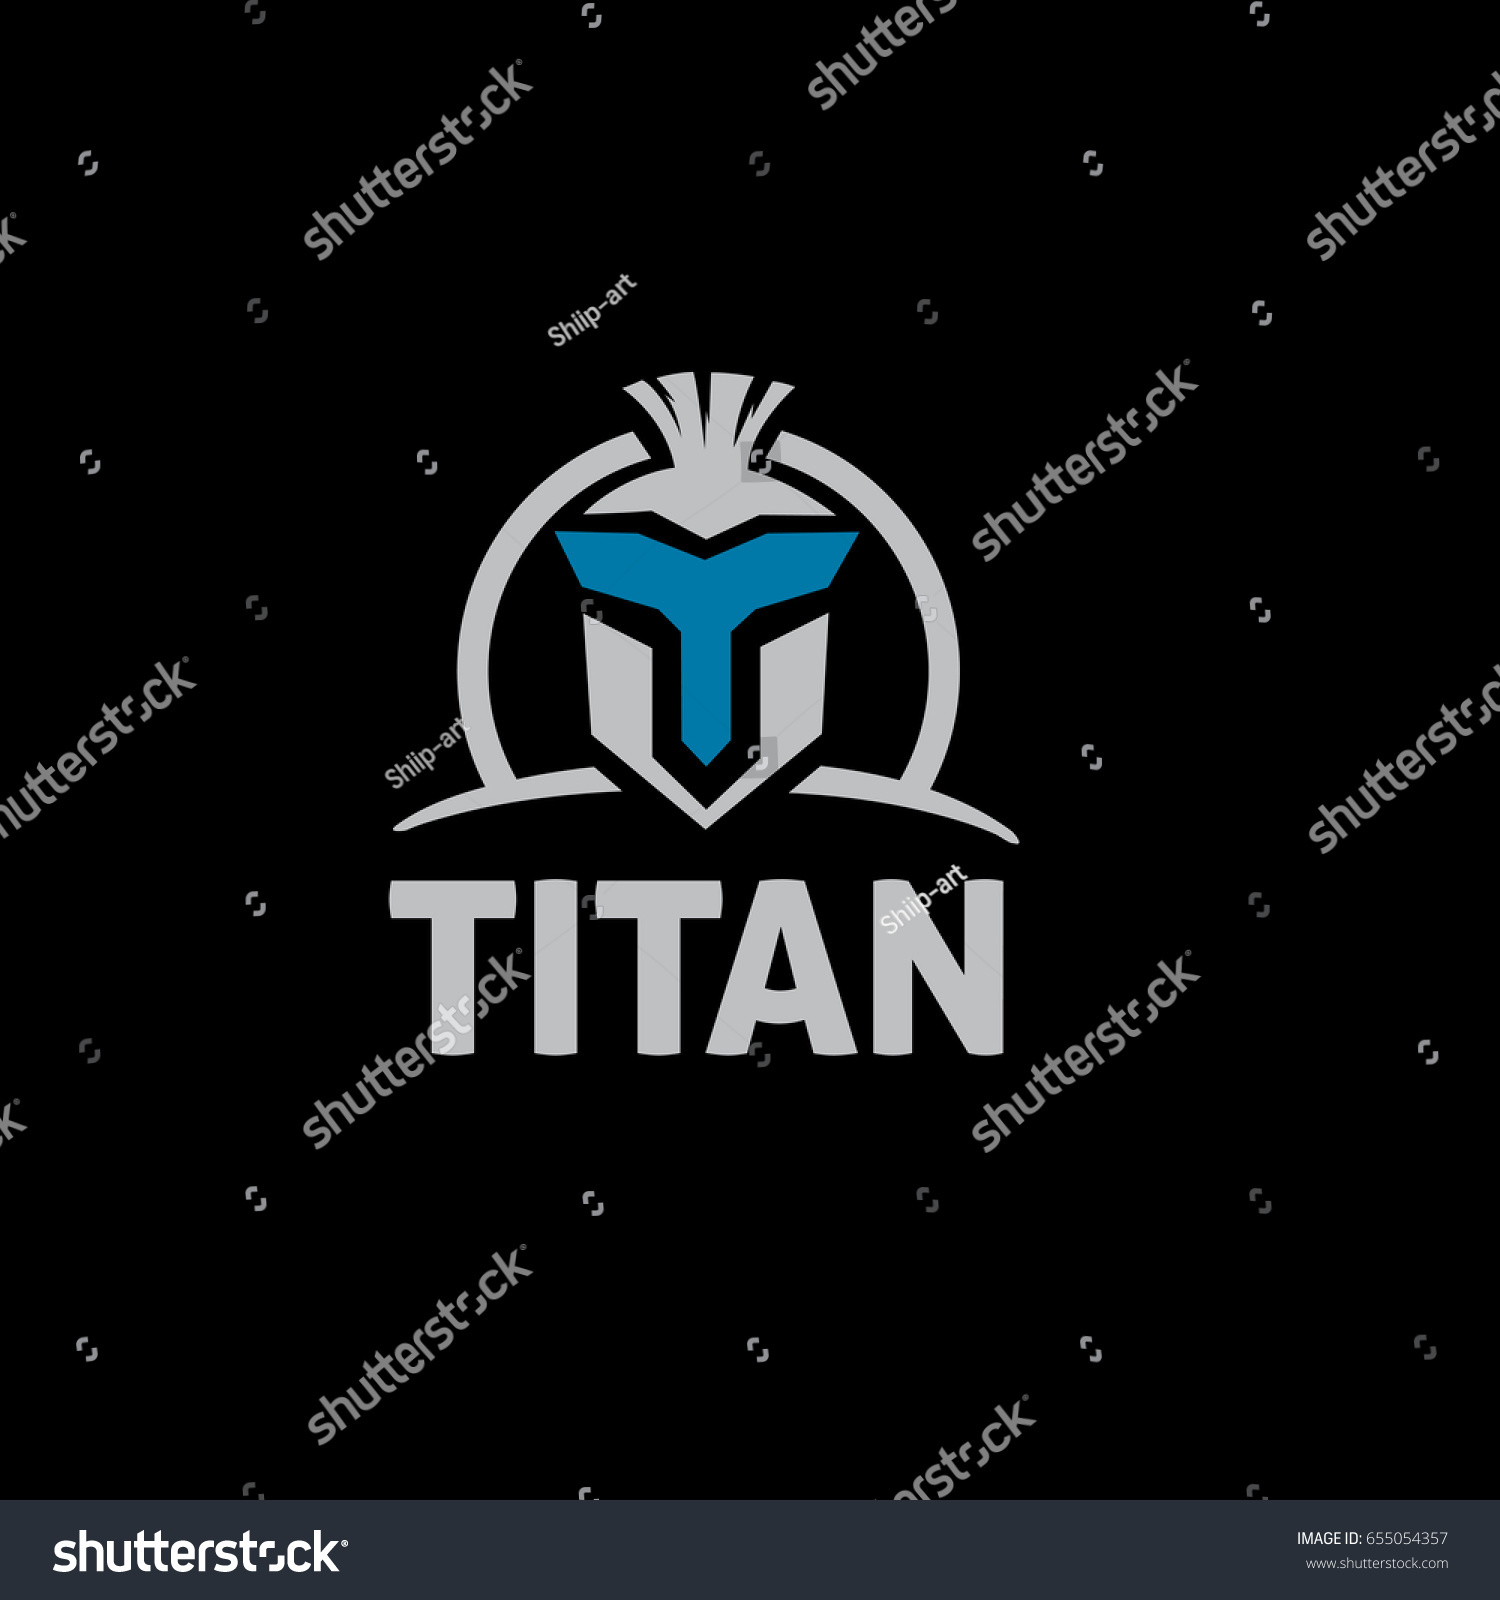 Pin by Ya'Donnis Hardaway on Logo ideas | Titan logo, Logos, Art